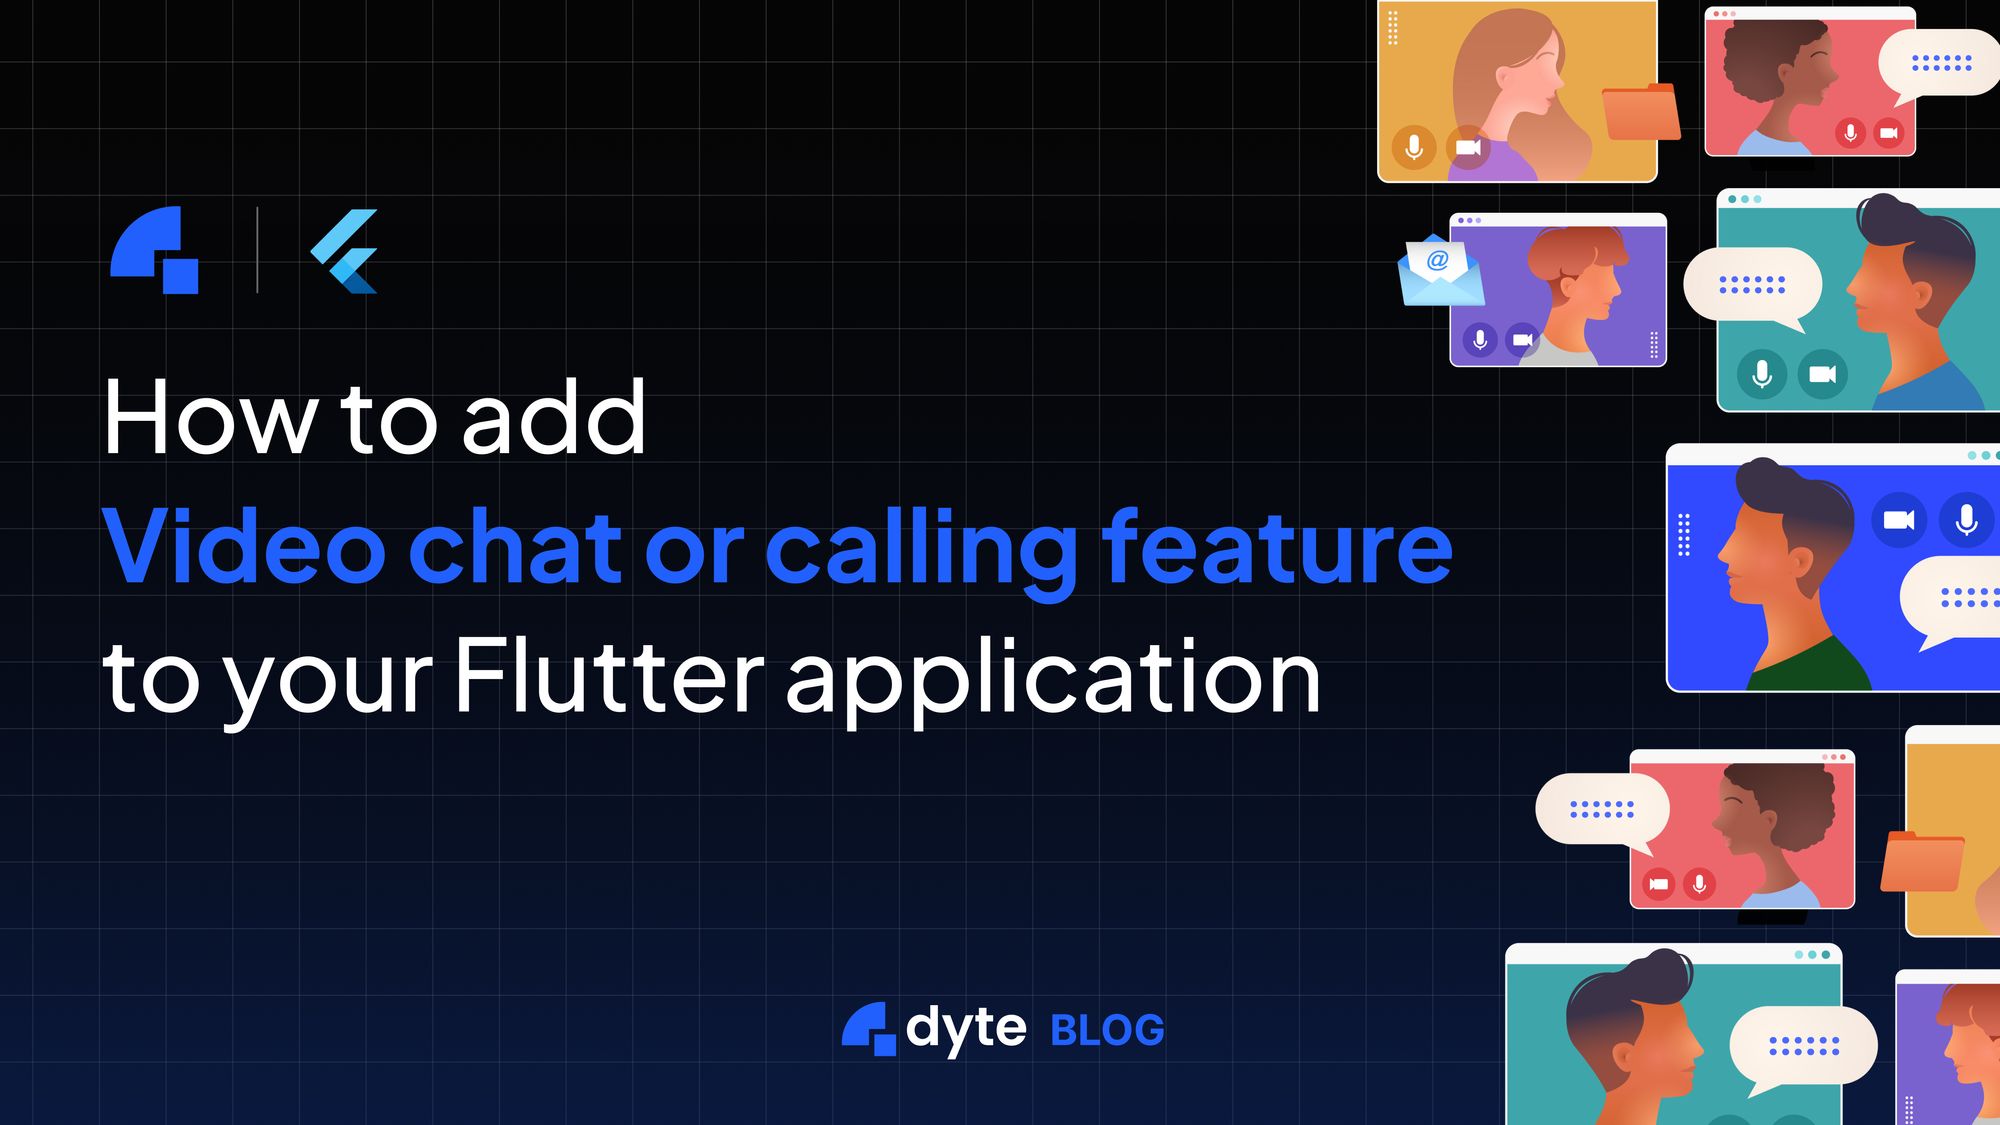 A simple avatar maker in Flutter